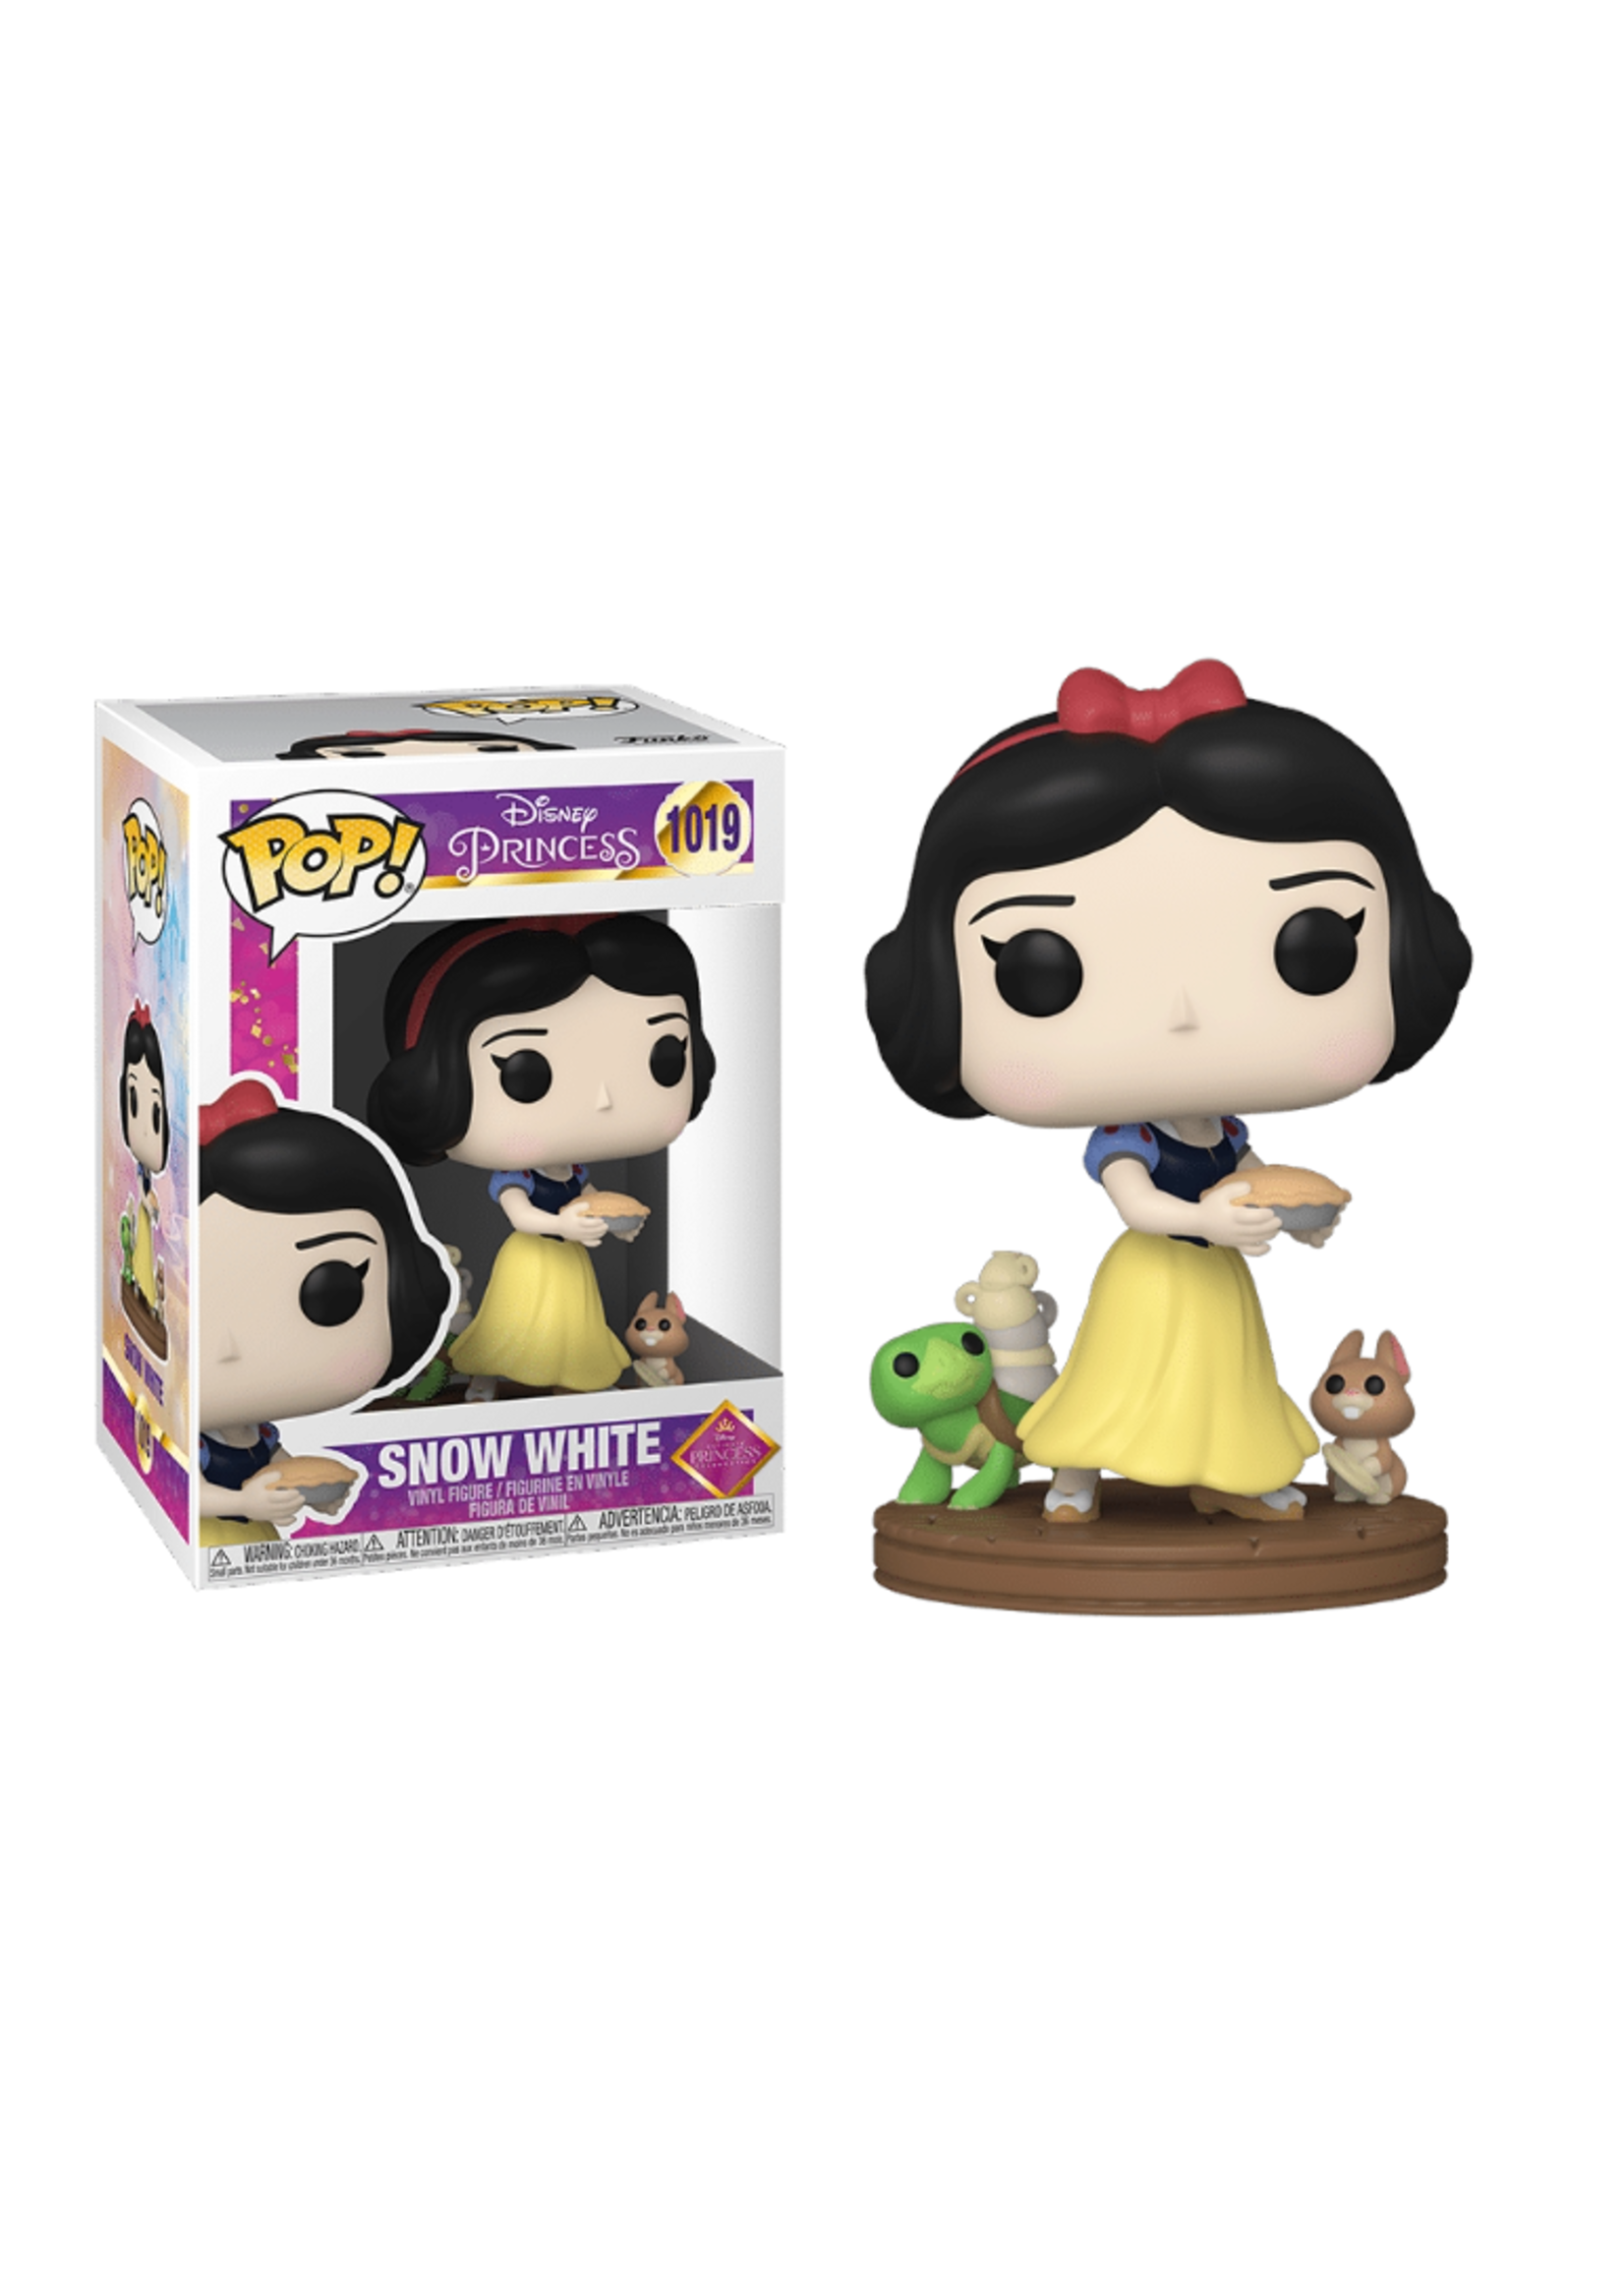 Funko POP! Ultimate Princess - Snow White